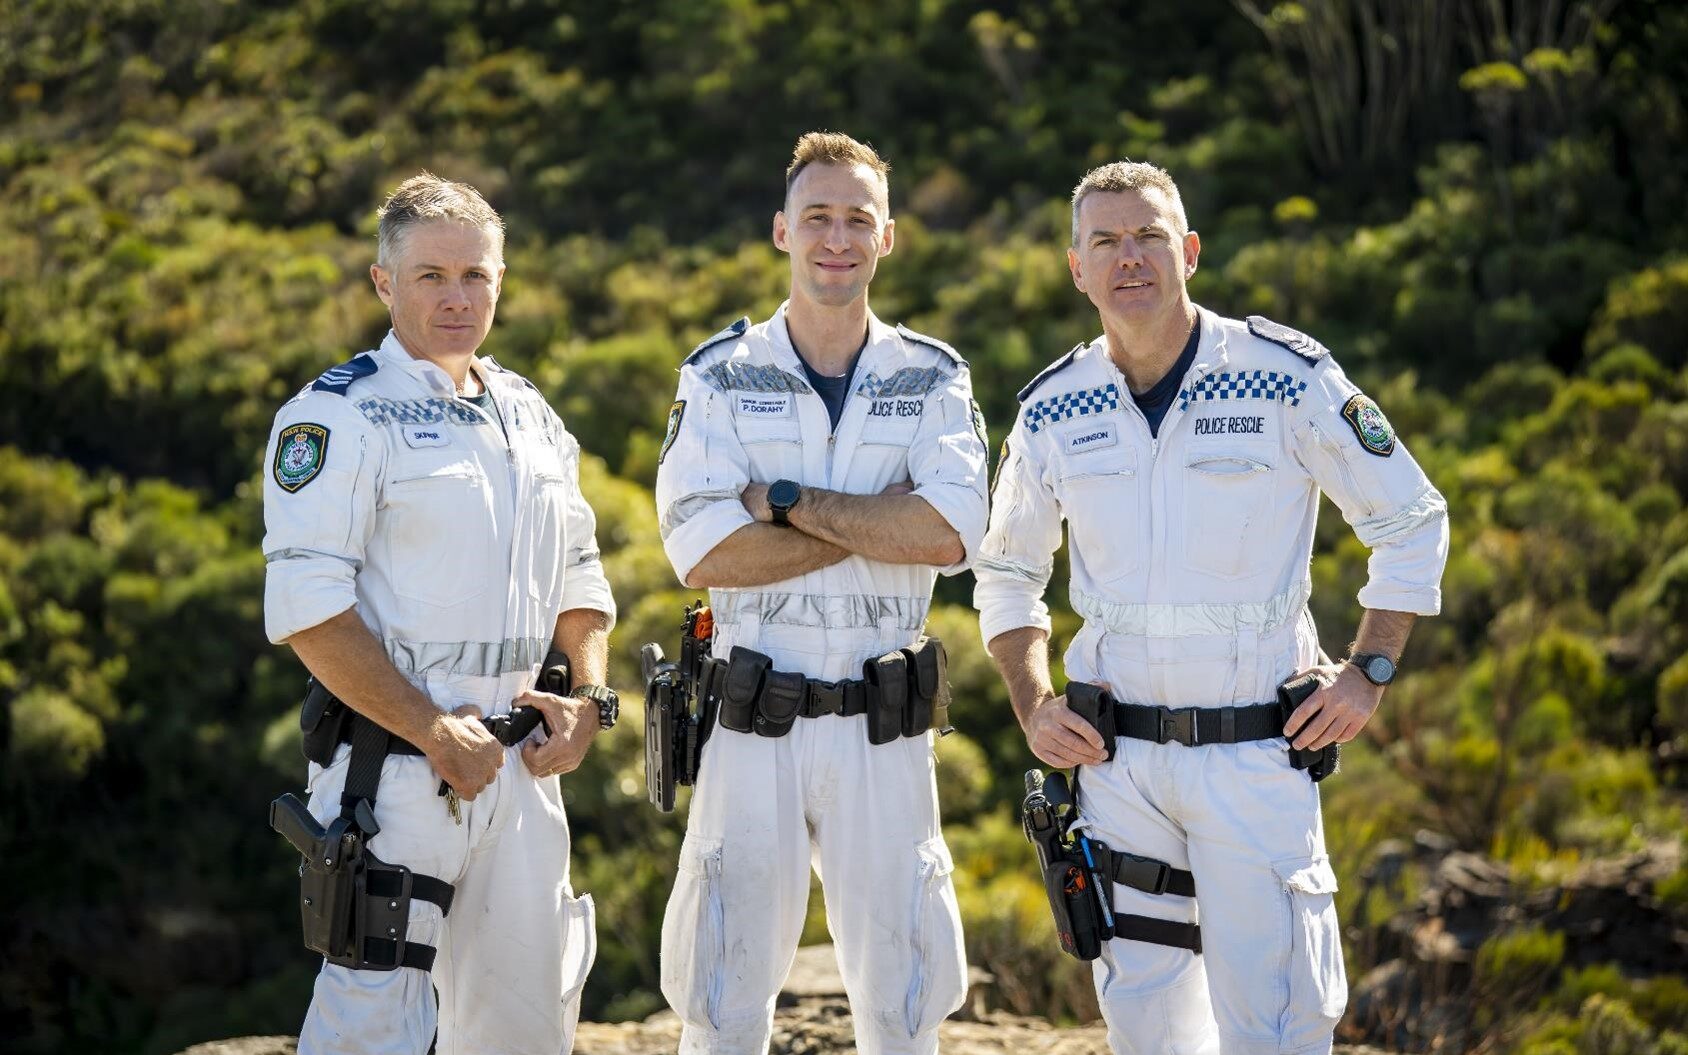 Police Rescue Australia on Channel 9